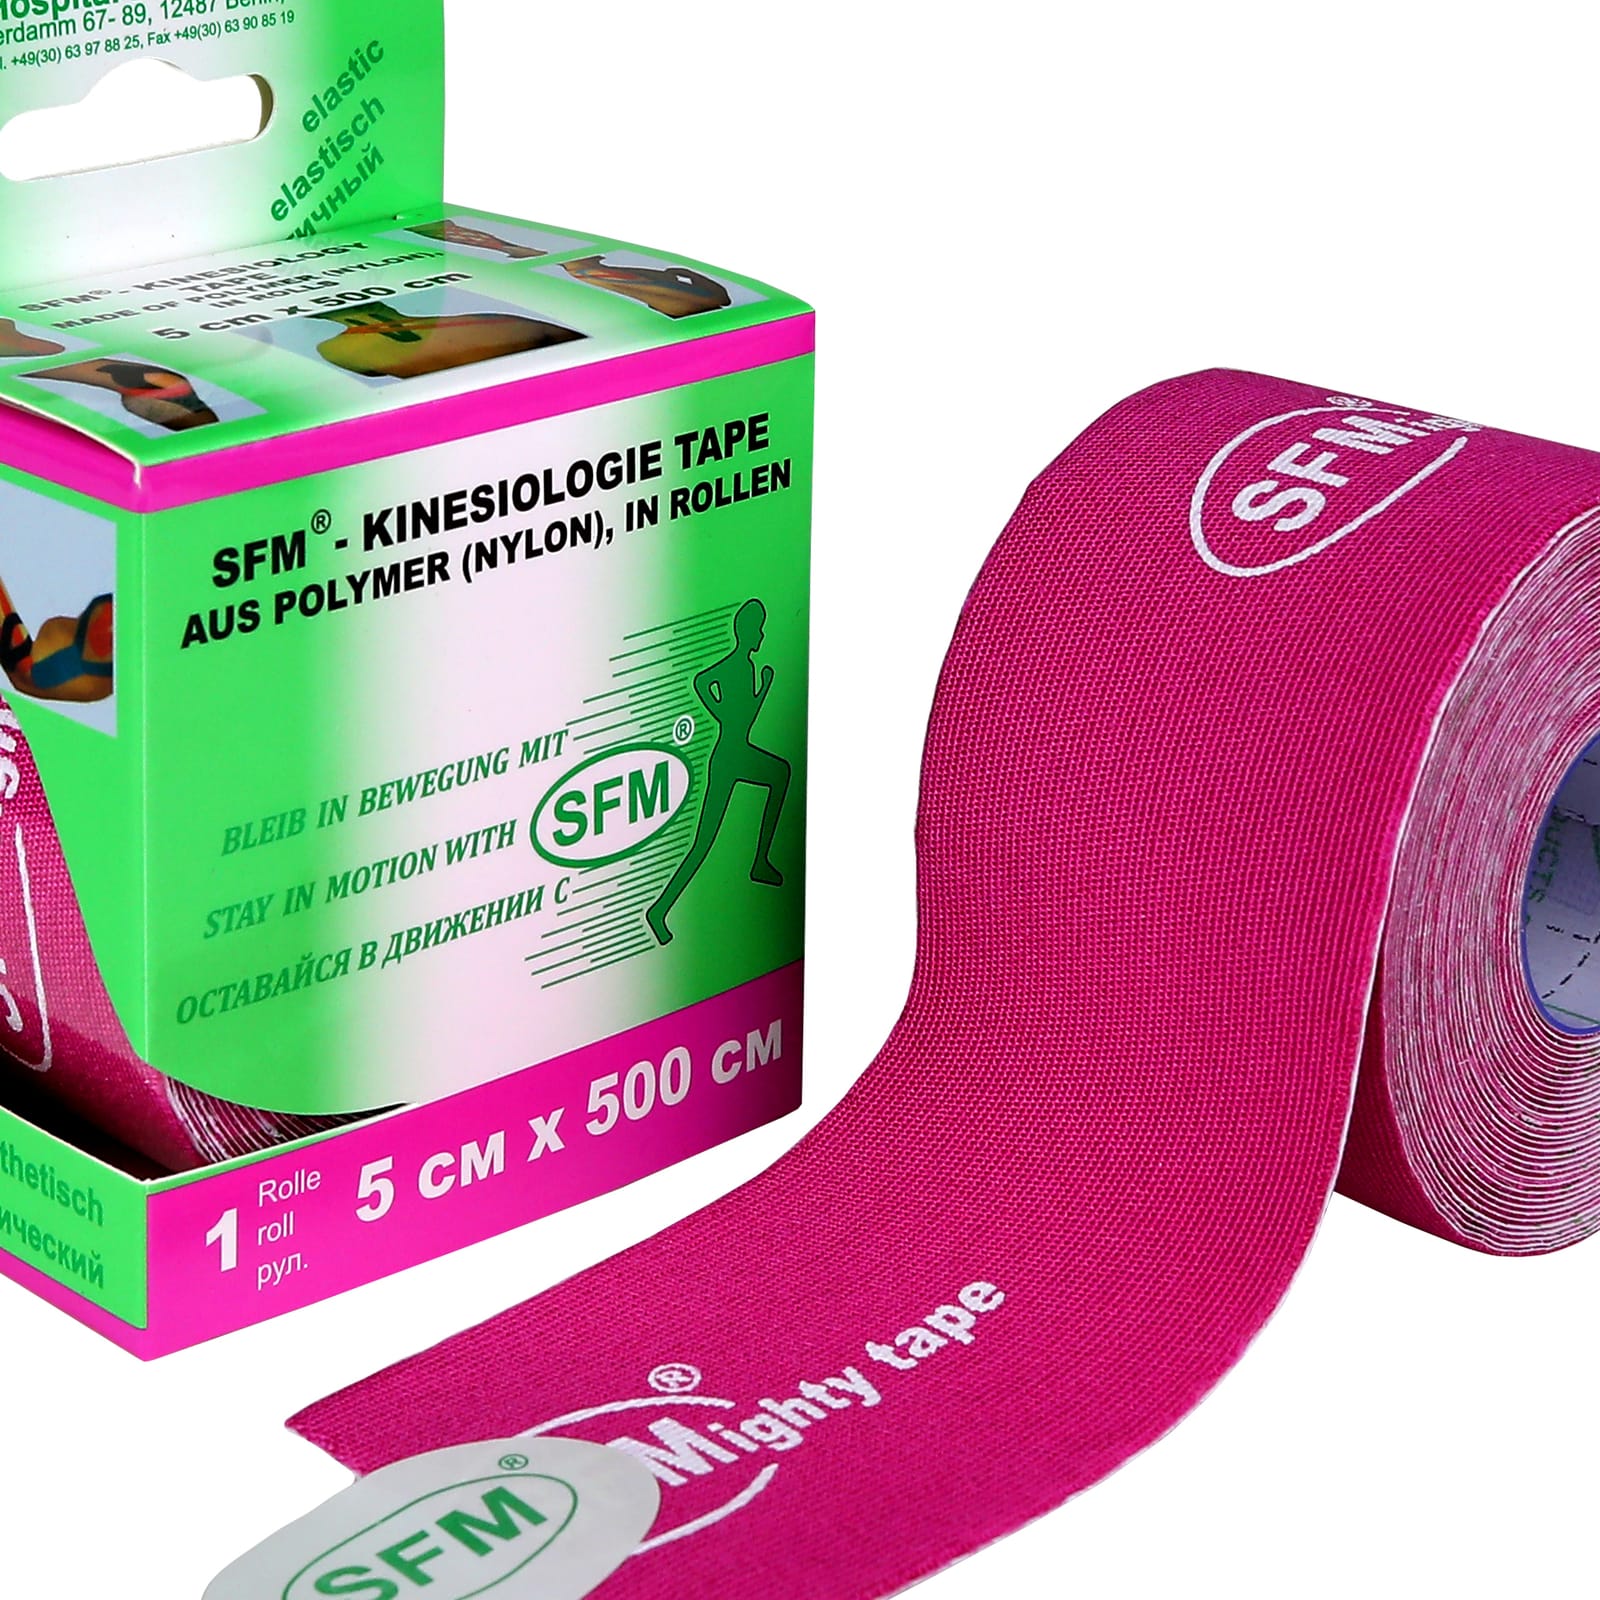 Кинезиотейп SFM Hospital Products Plaster на полимерной основе 5х500 см розового цвета в диспенсере - фото 2